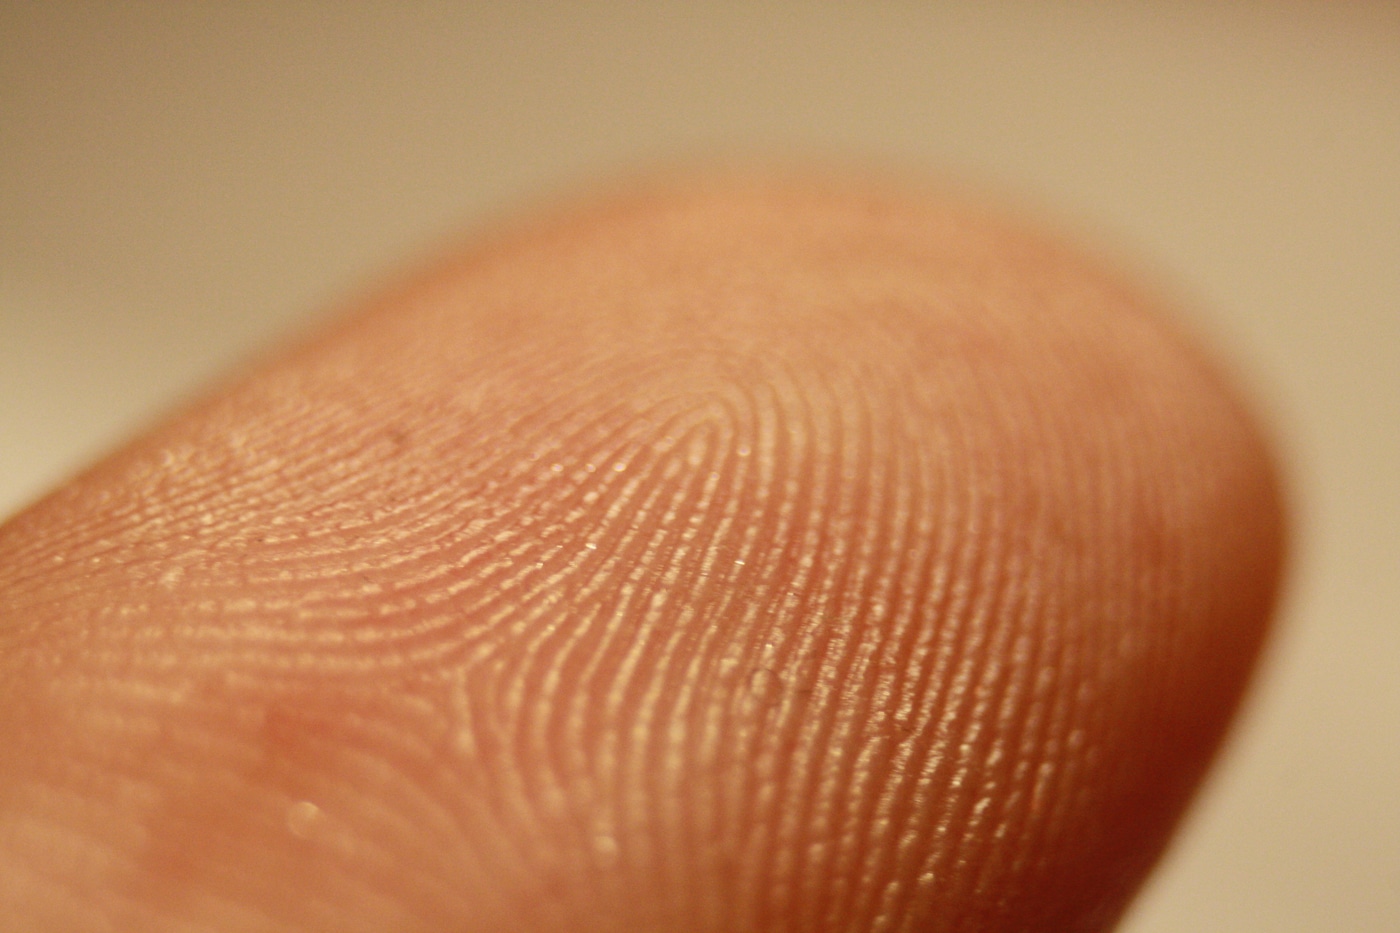 biometric-fingerprint-scan-store-purchases